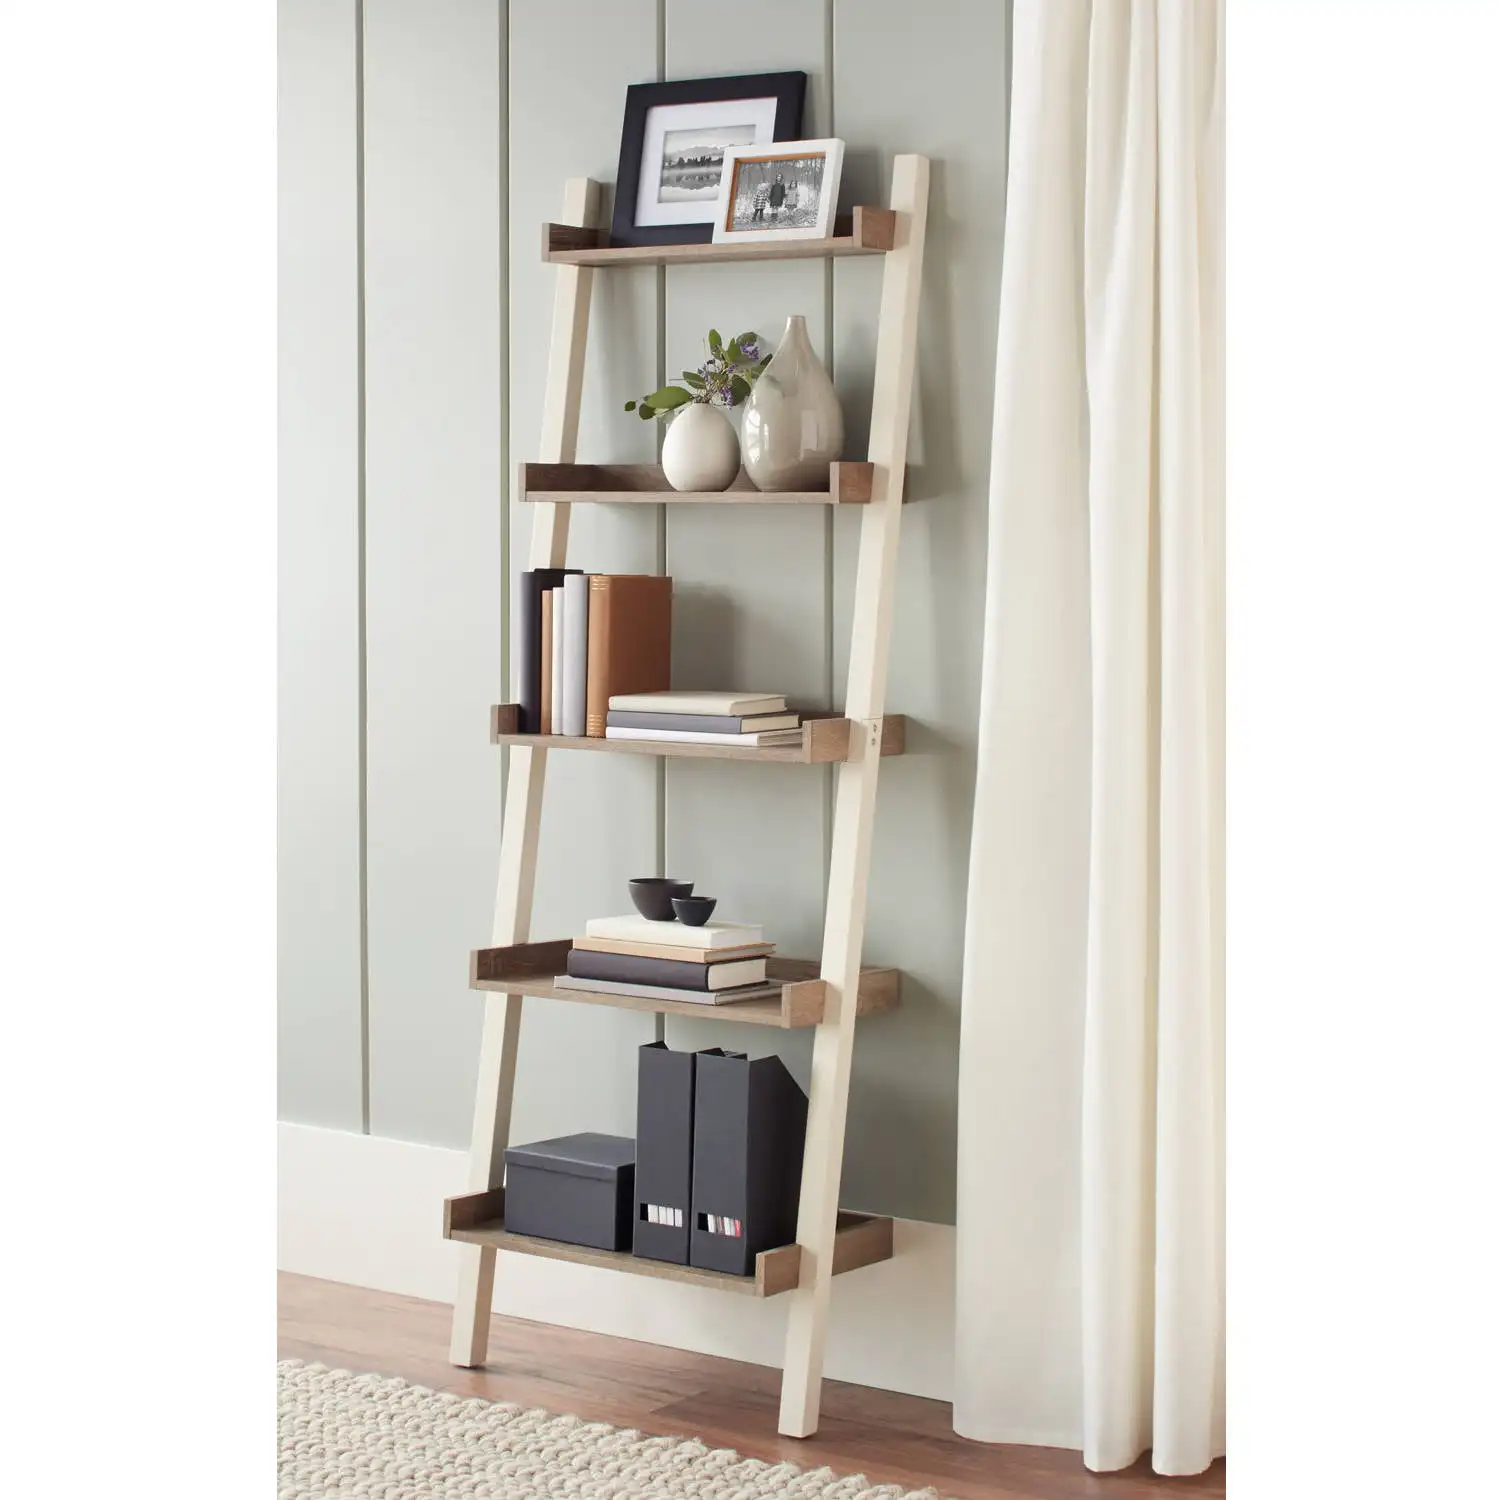 

Better Homes & Gardens Bedford 5 Shelf Leaning Bookcase, Off-White